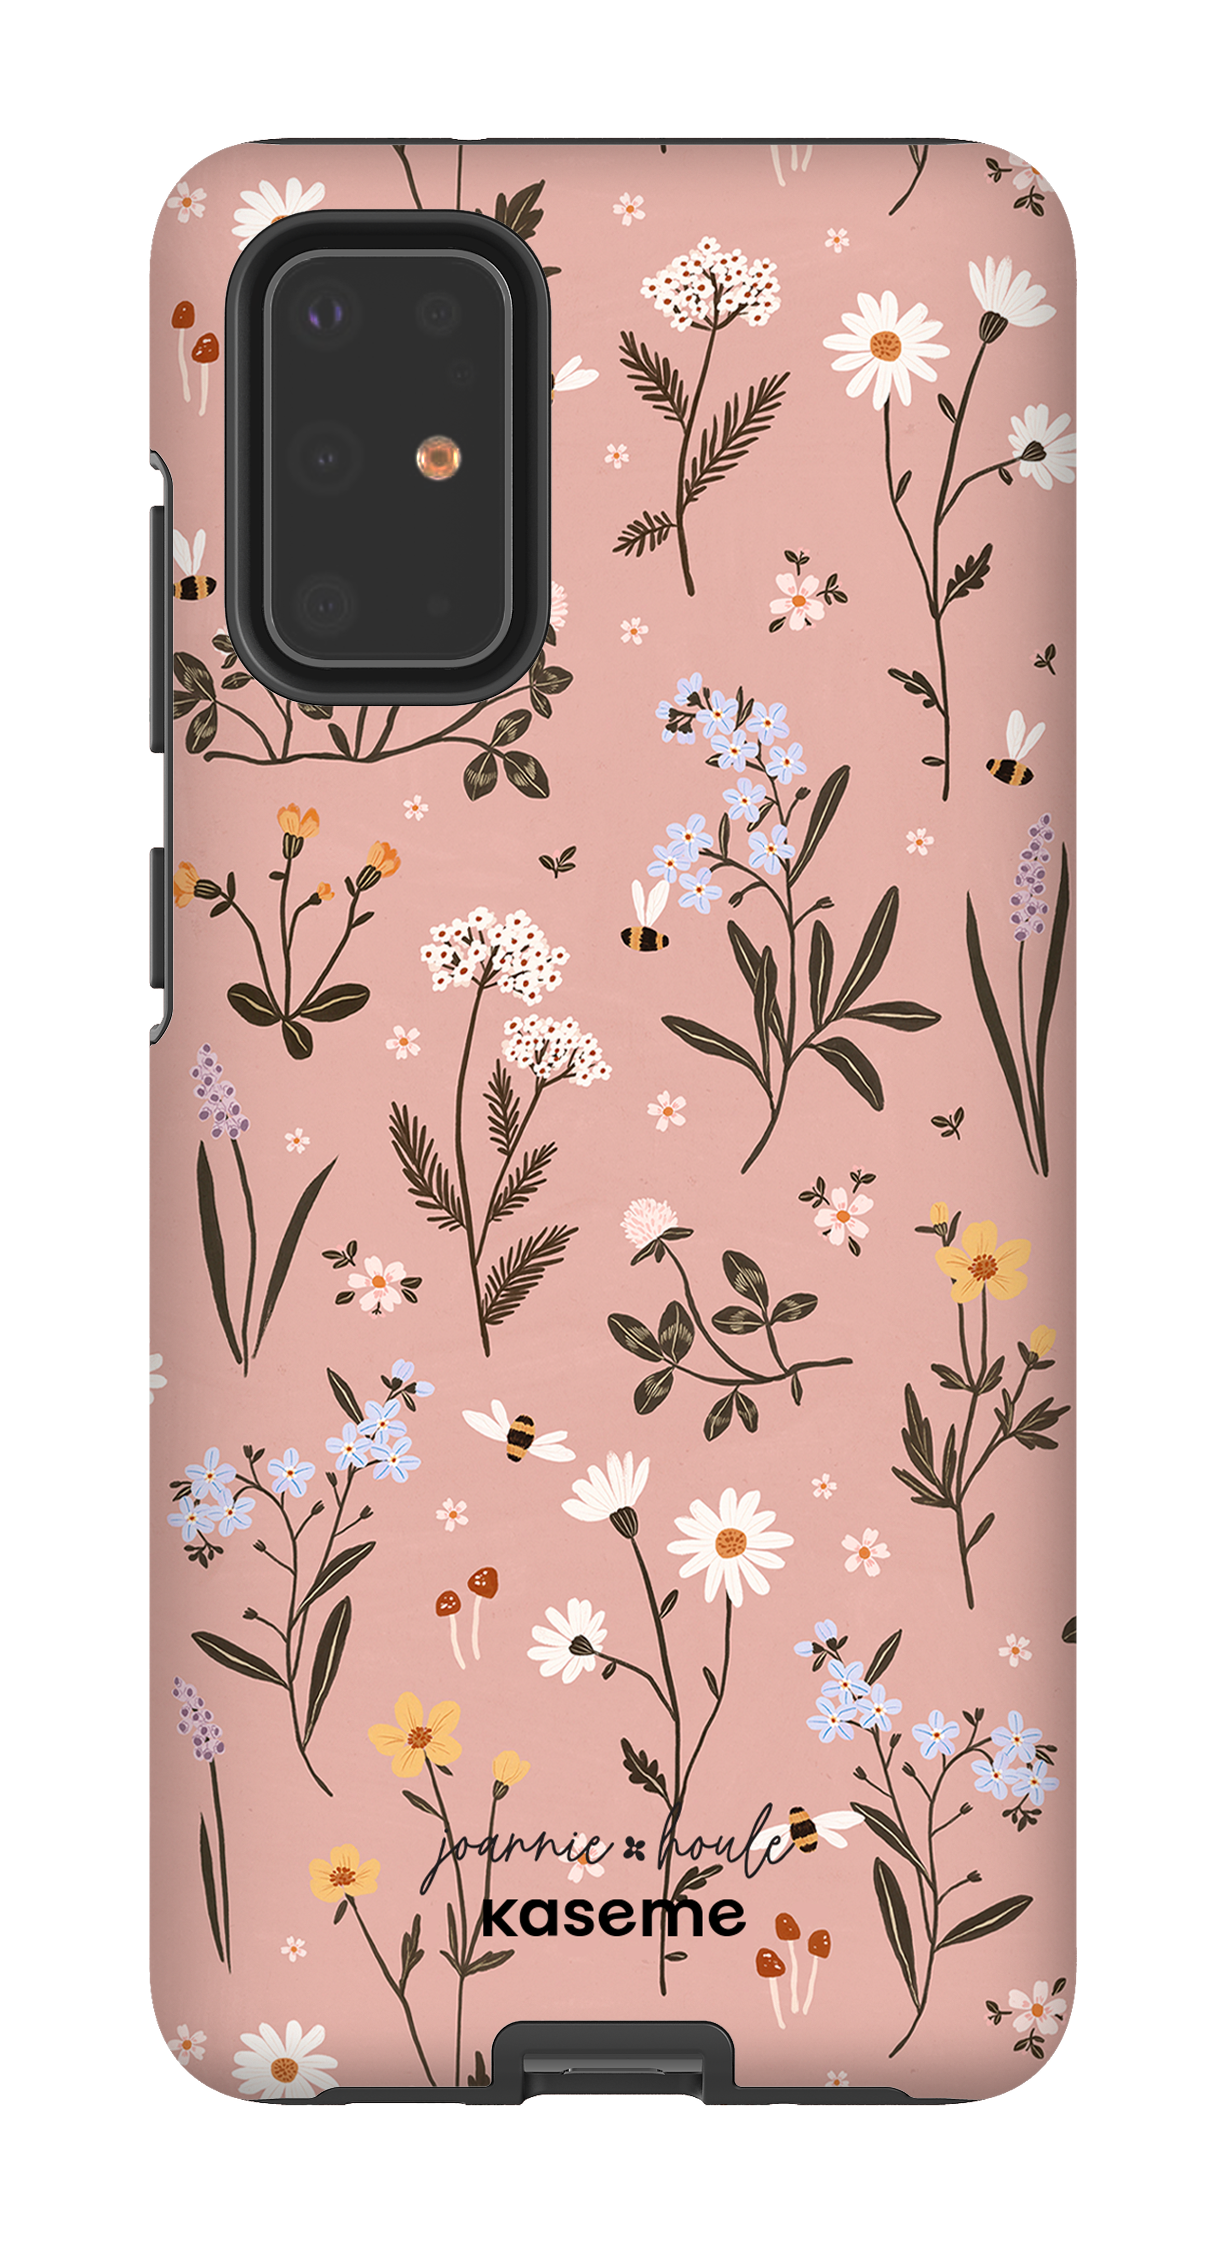 Spring Garden Pink by Joannie Houle - Galaxy S20 Plus